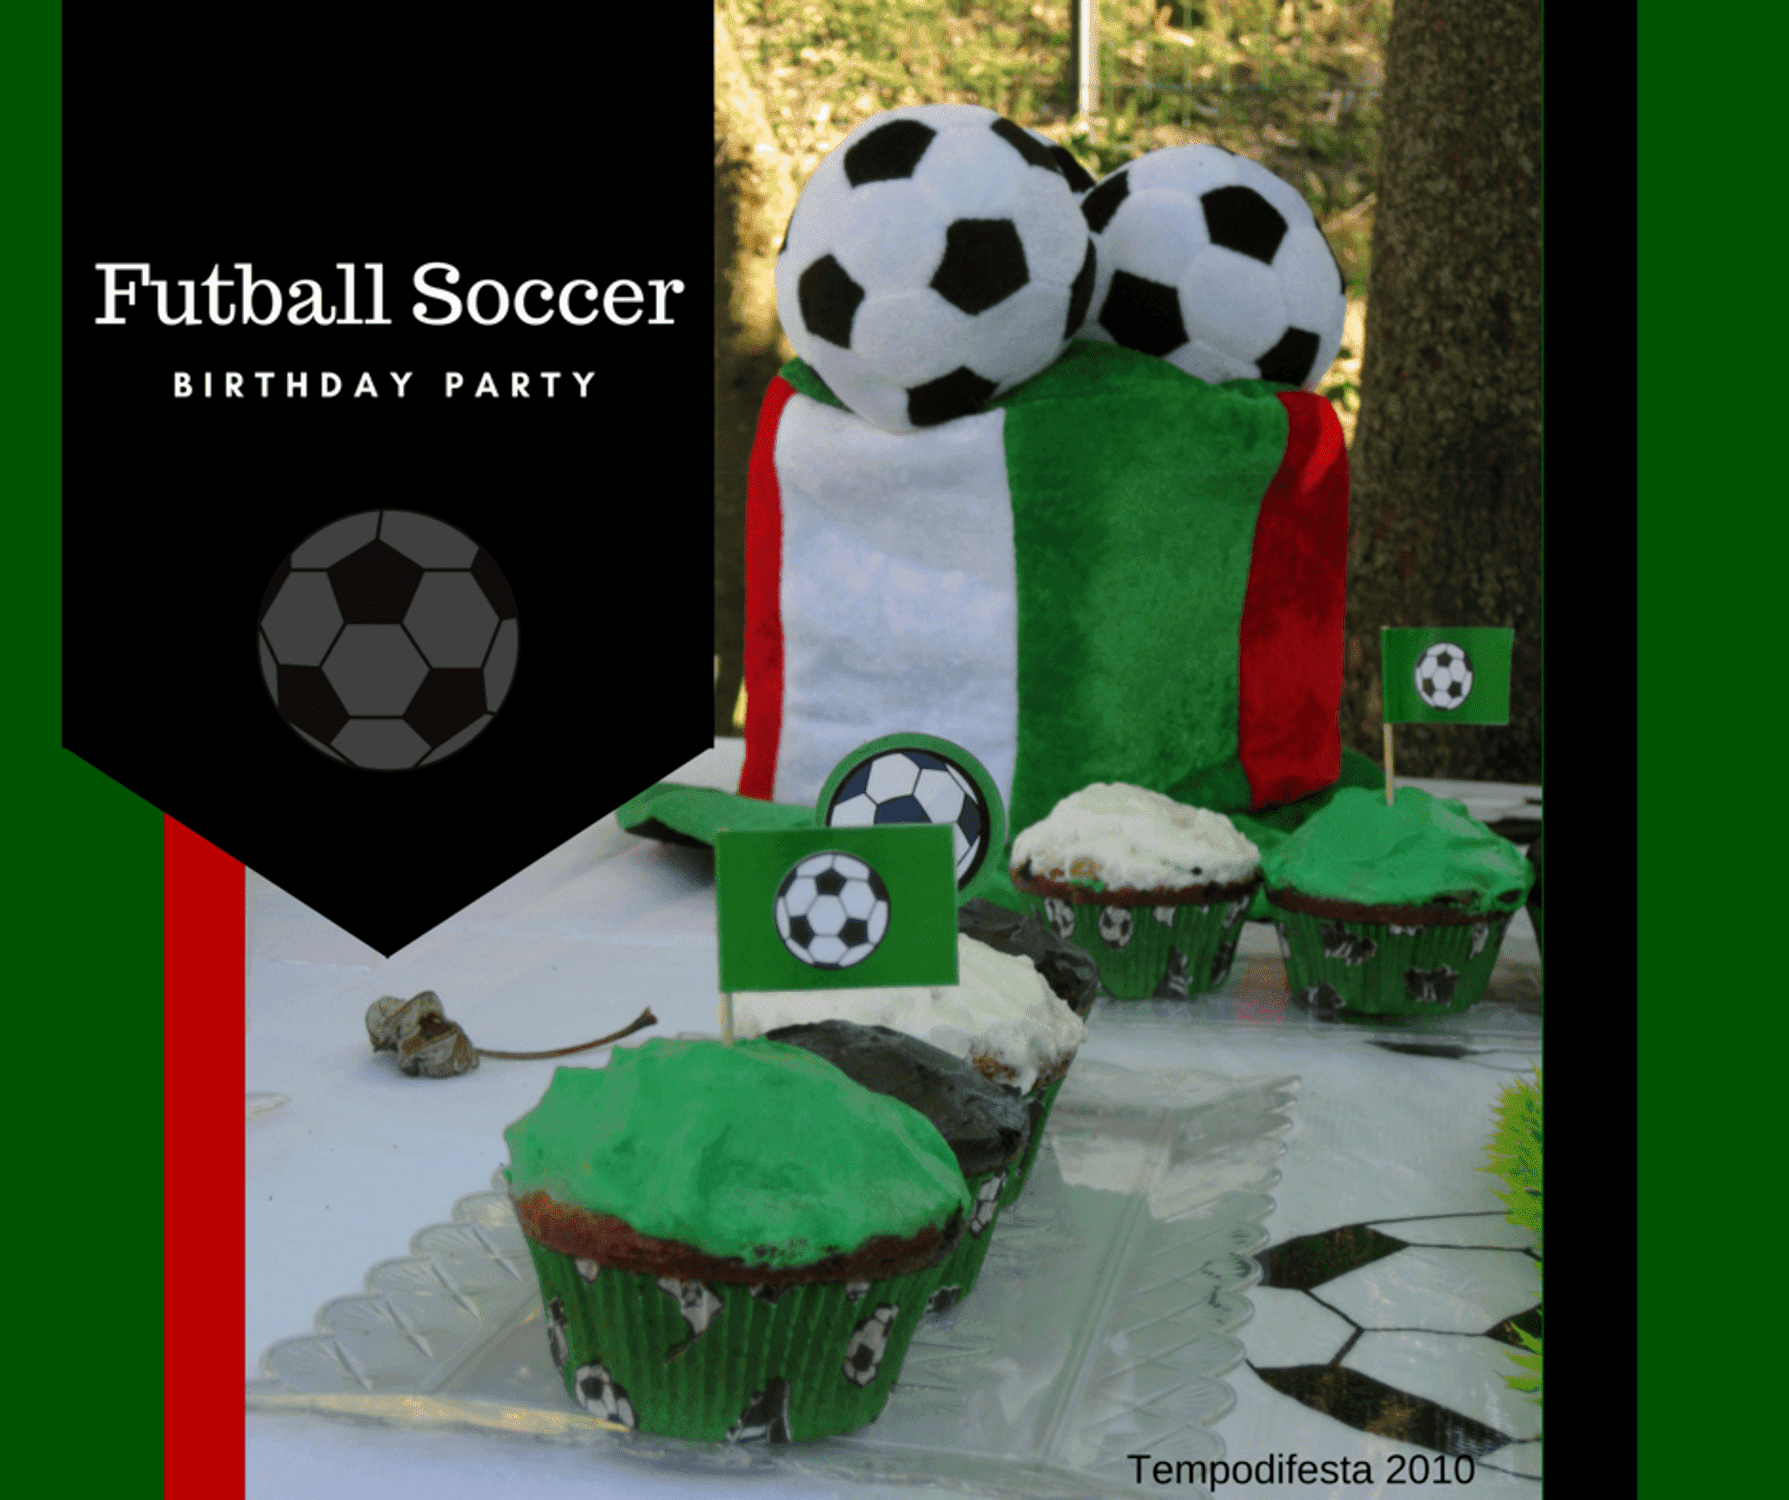 Futball Soccer